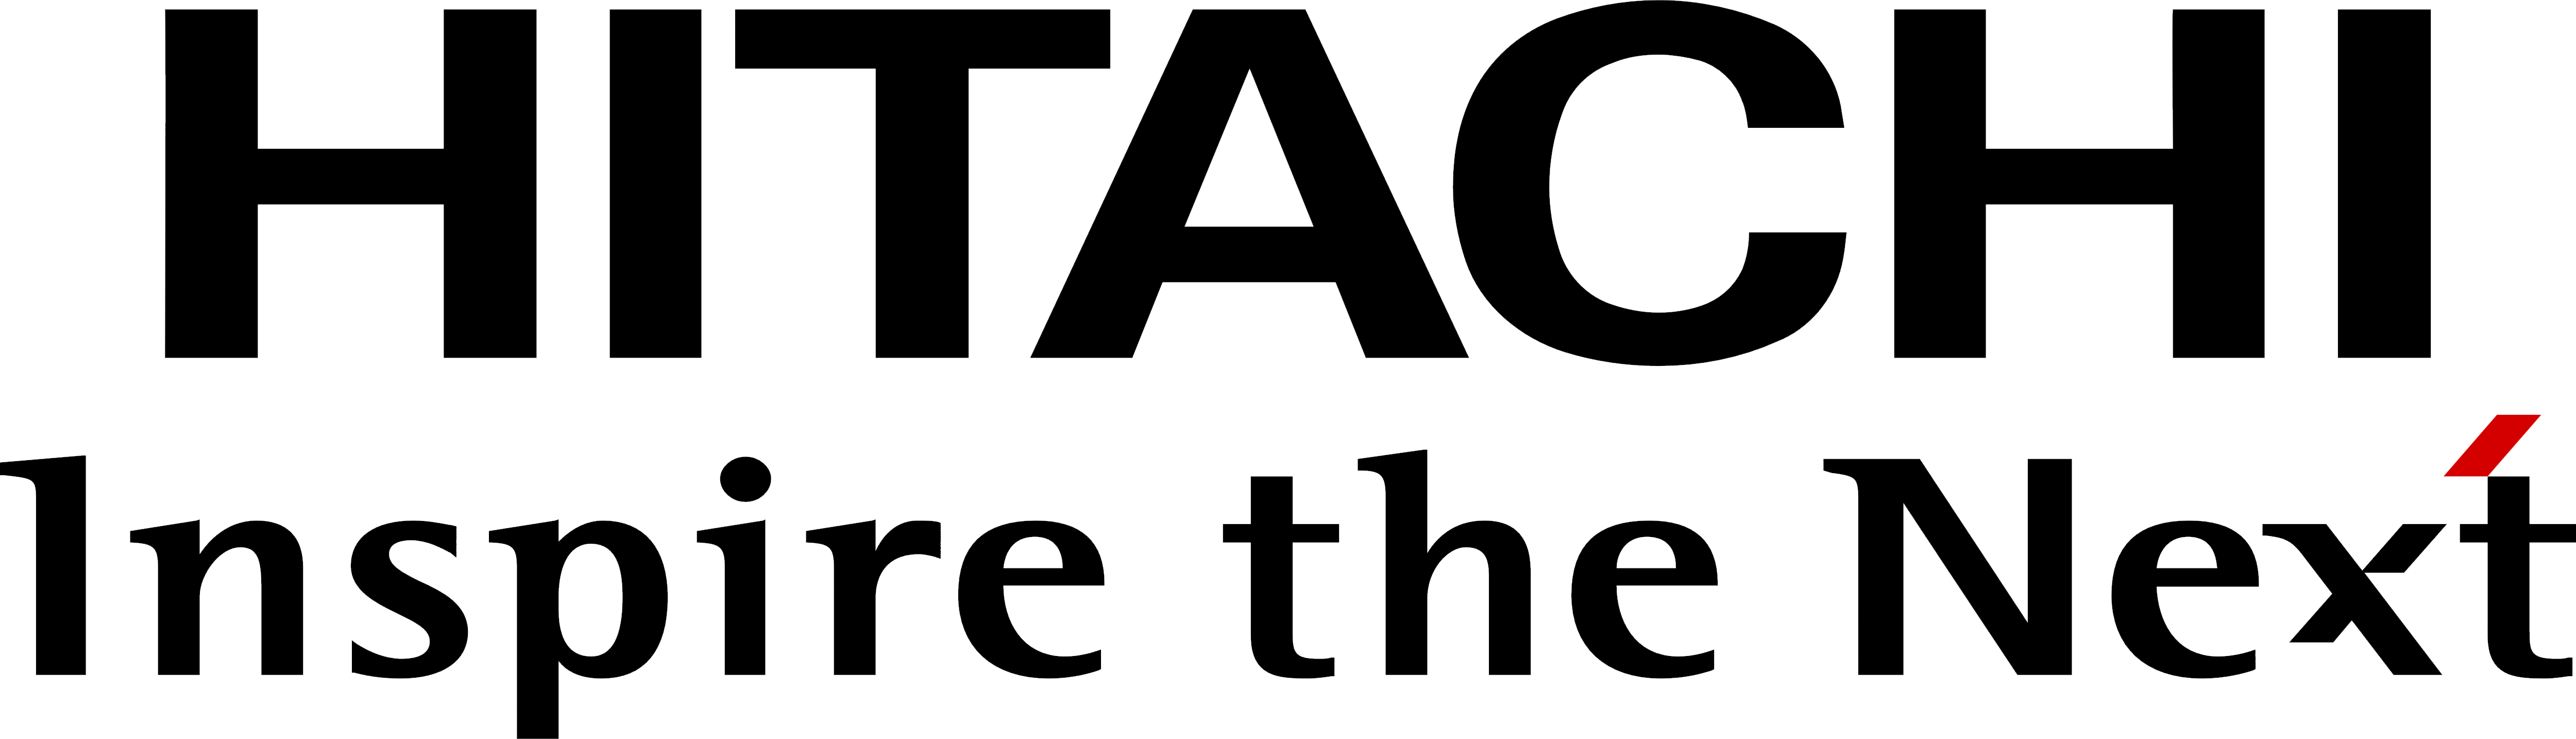 Hitachi_logo_logotype_black